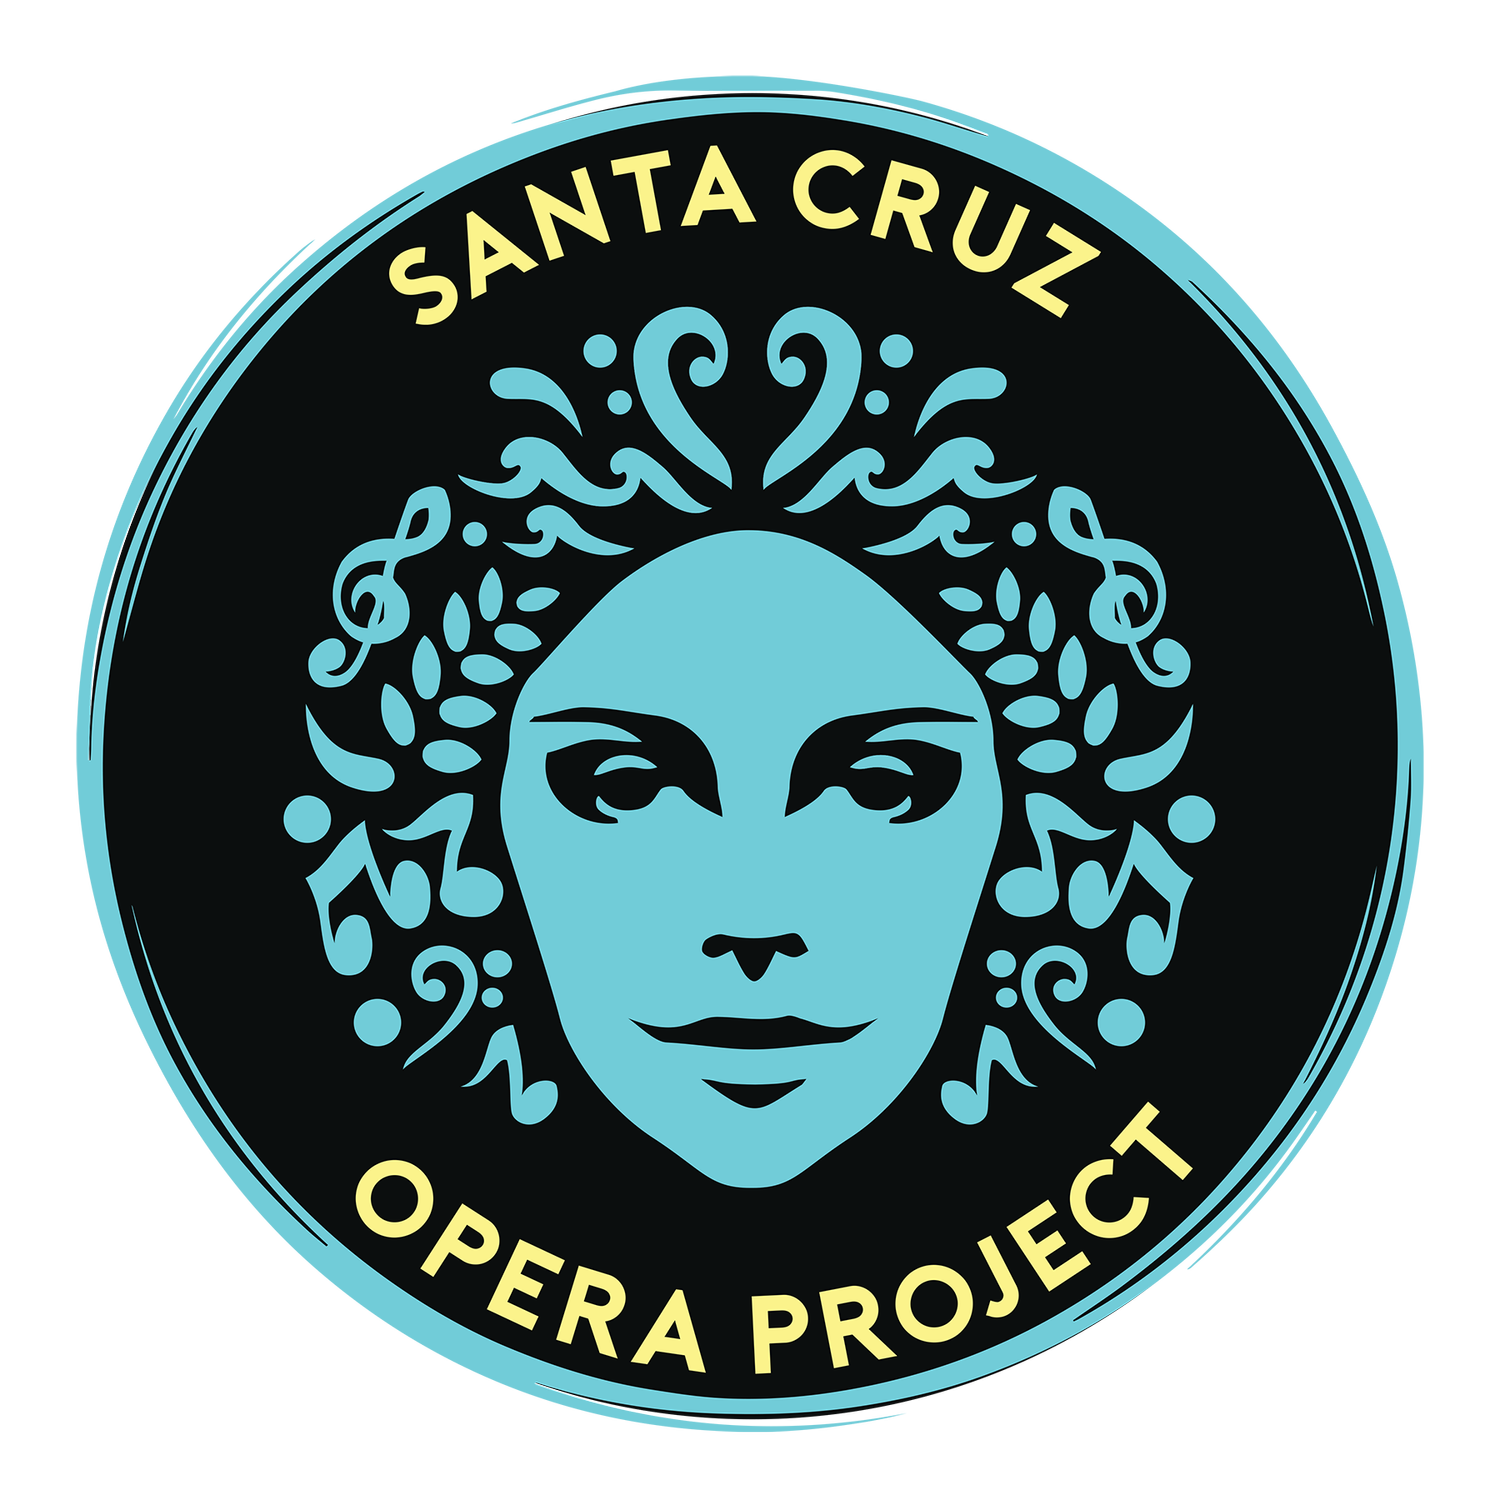 Santa Cruz Opera Project